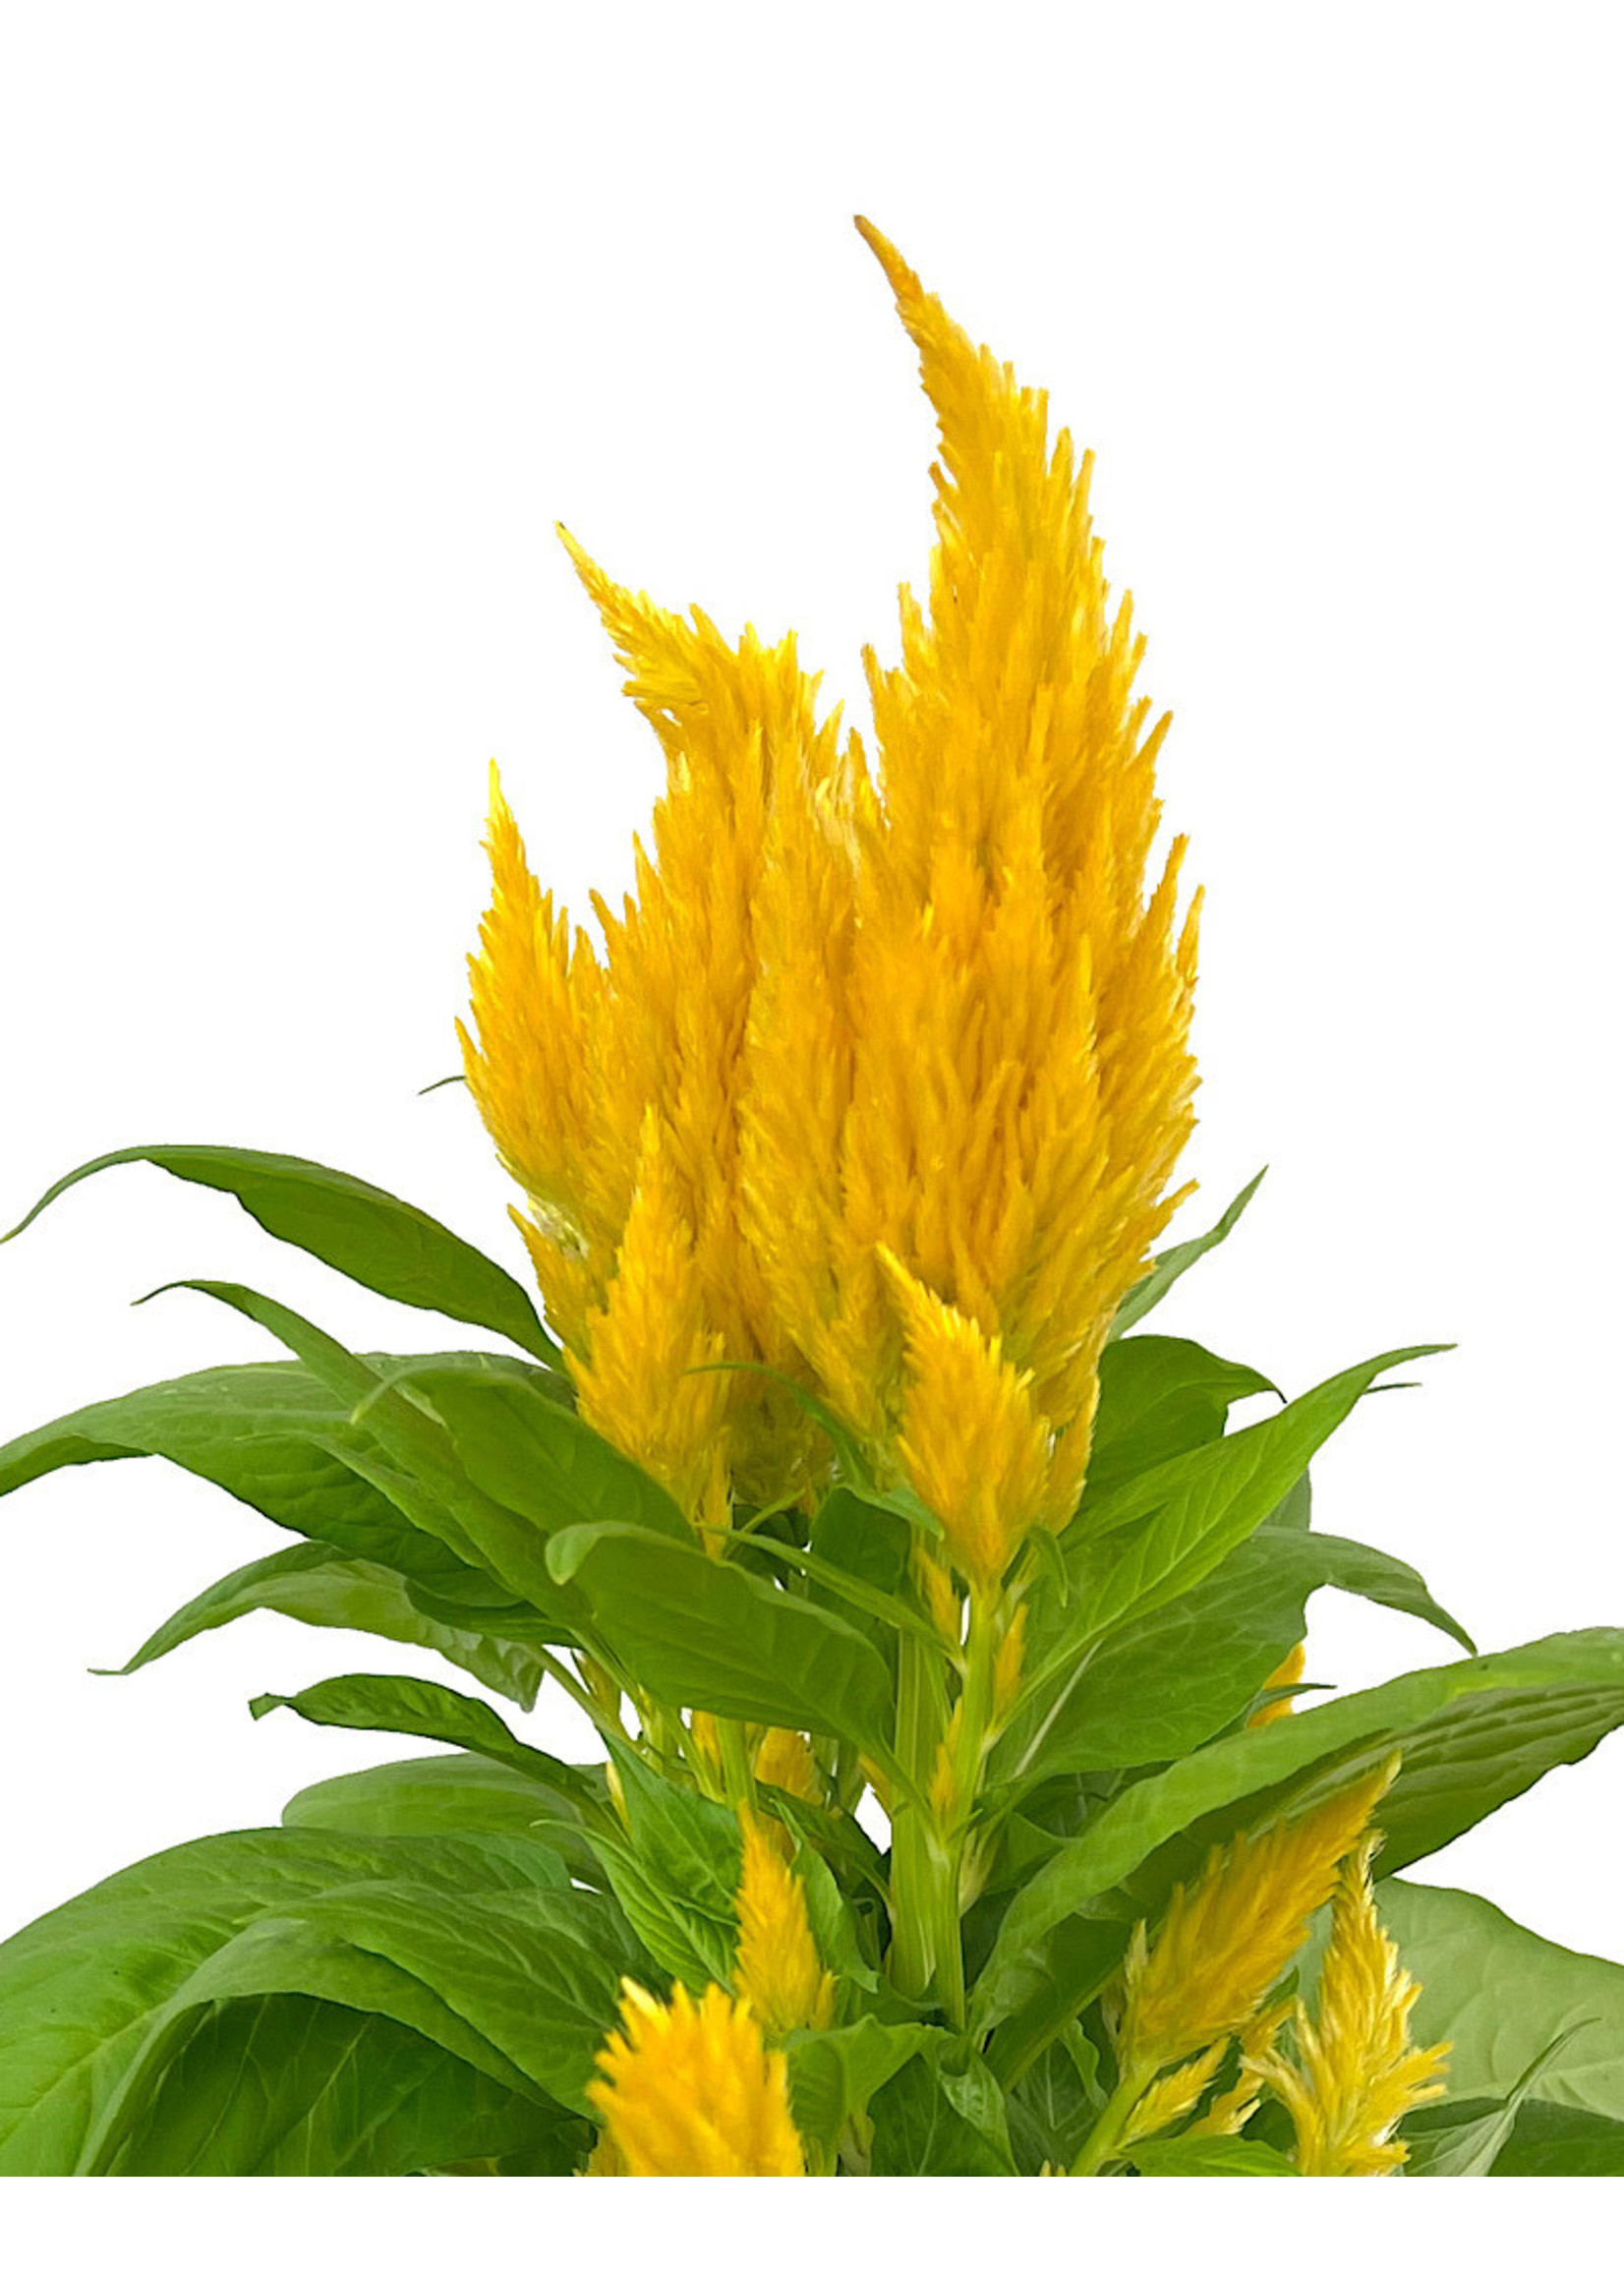 Celosia 'First Flame Yellow' 1 Gallon